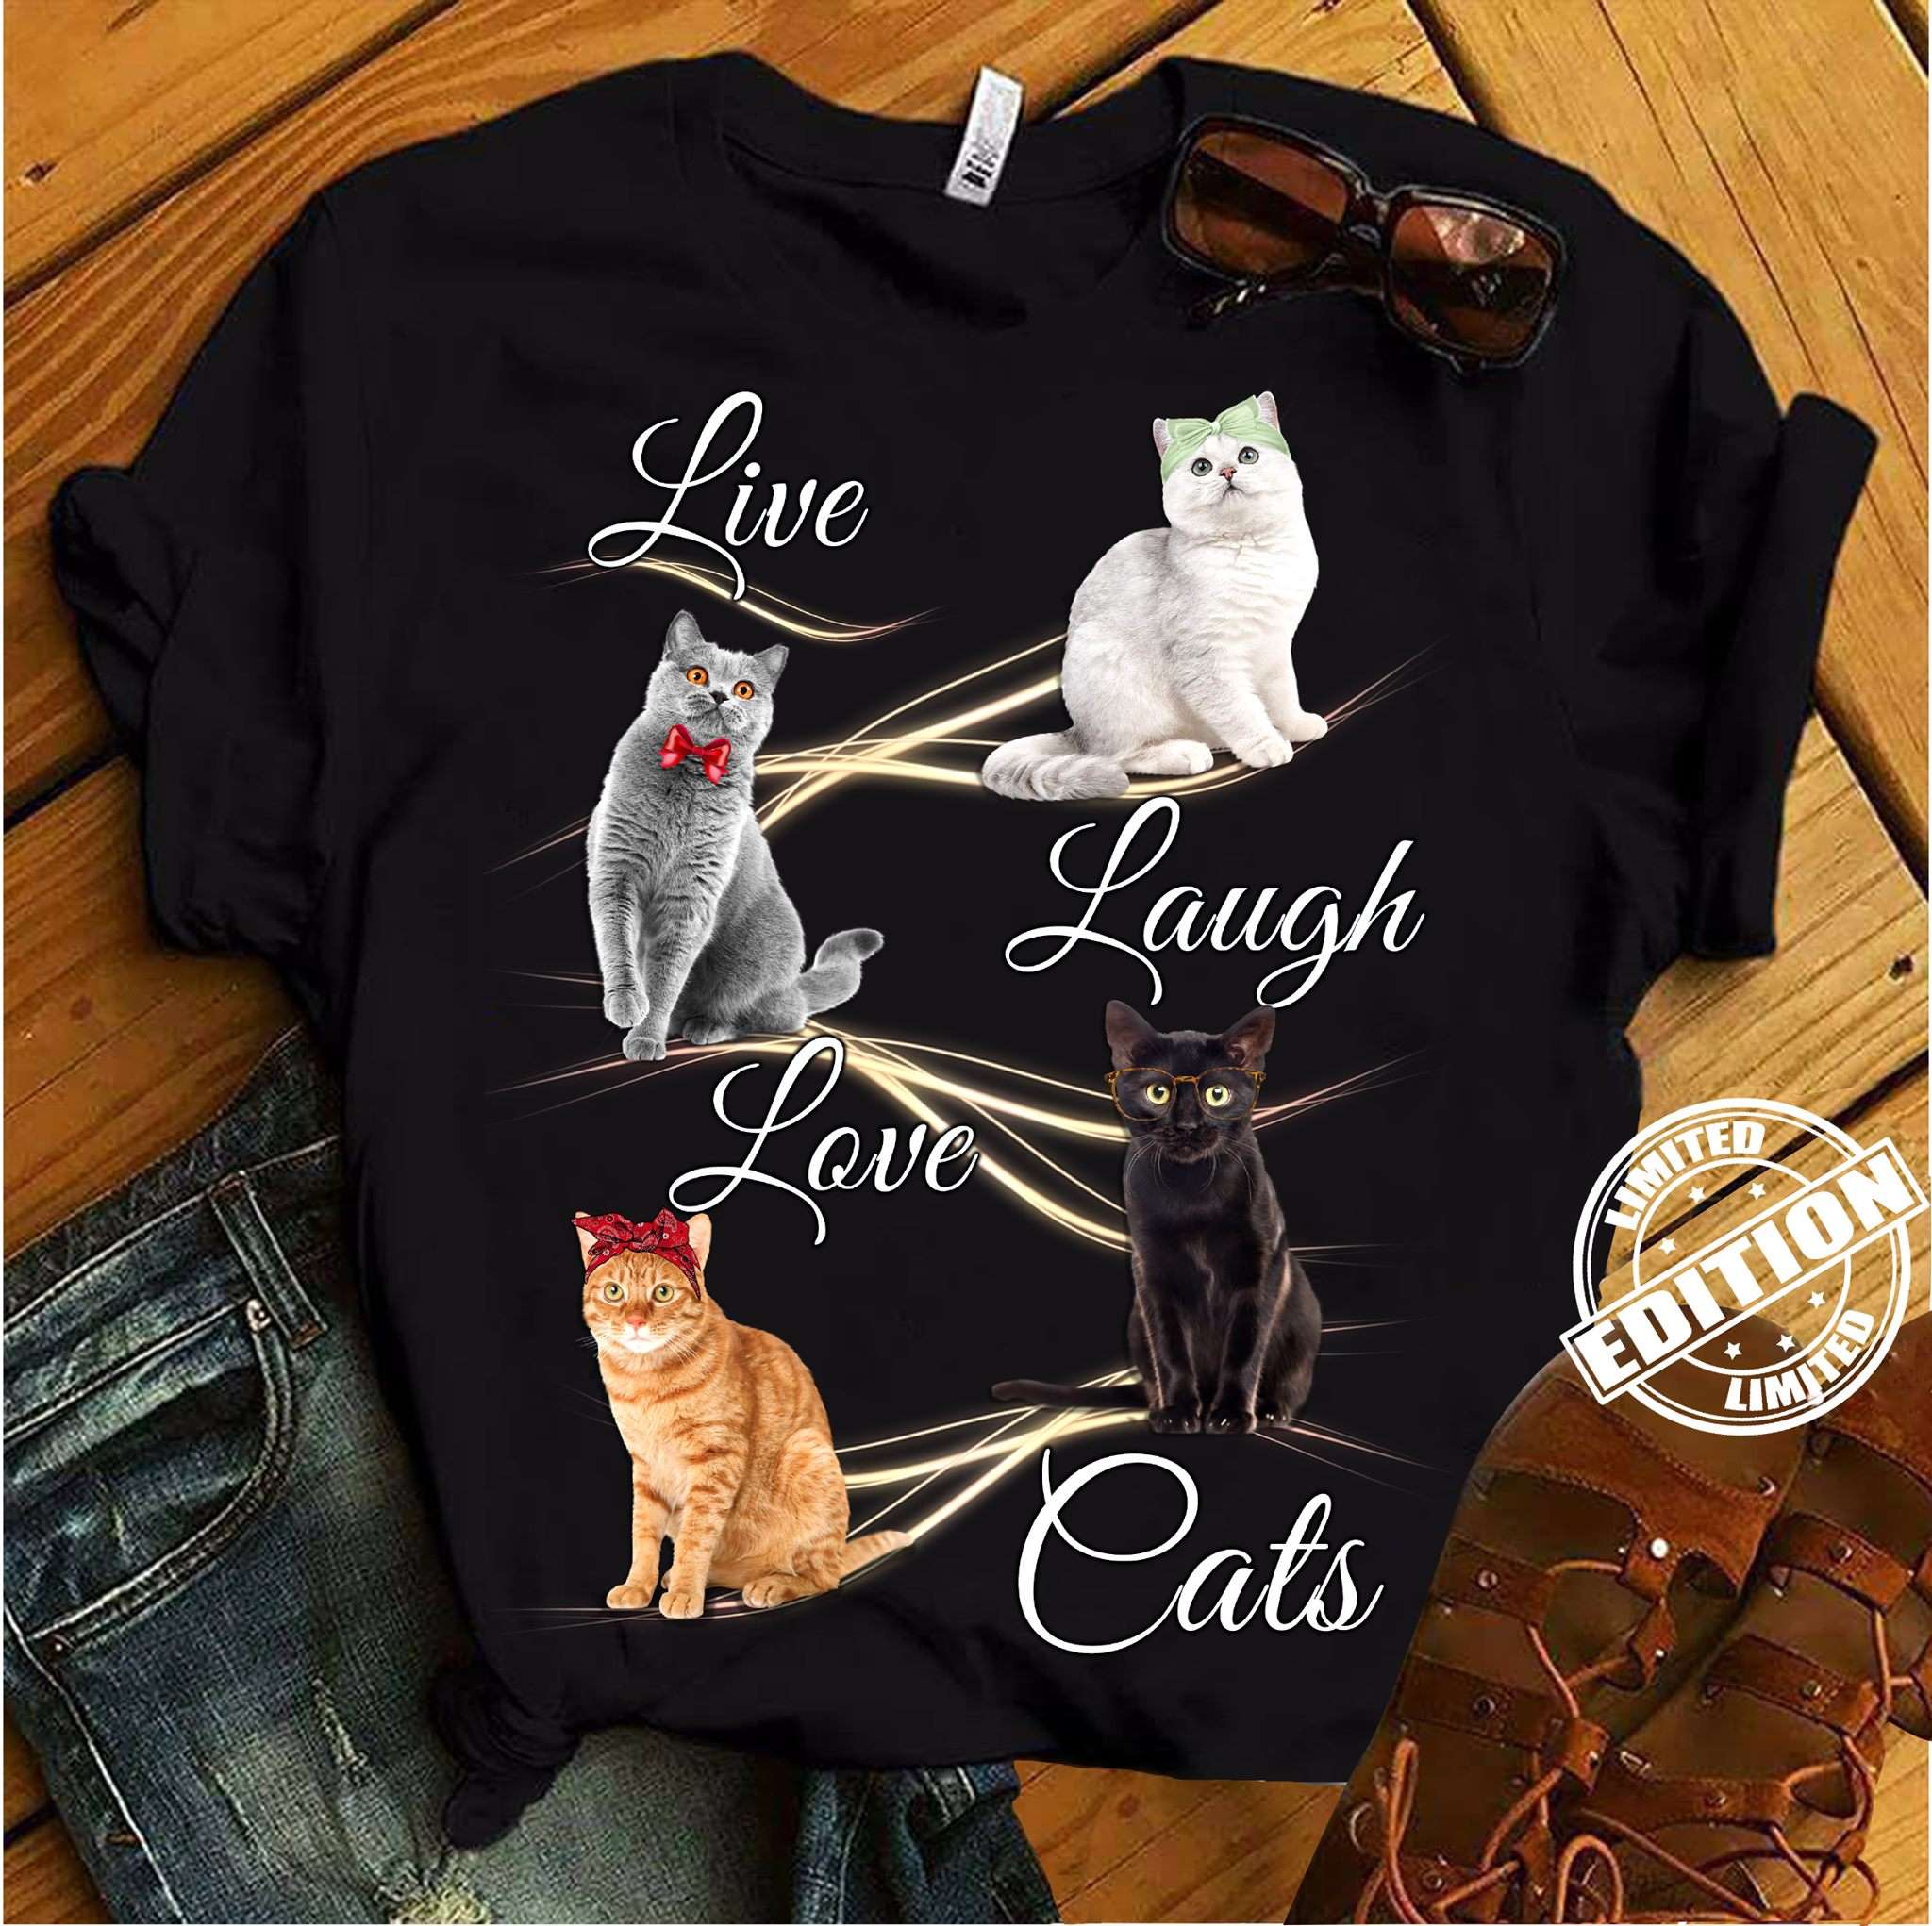 Love Cats - Live laugh love cats